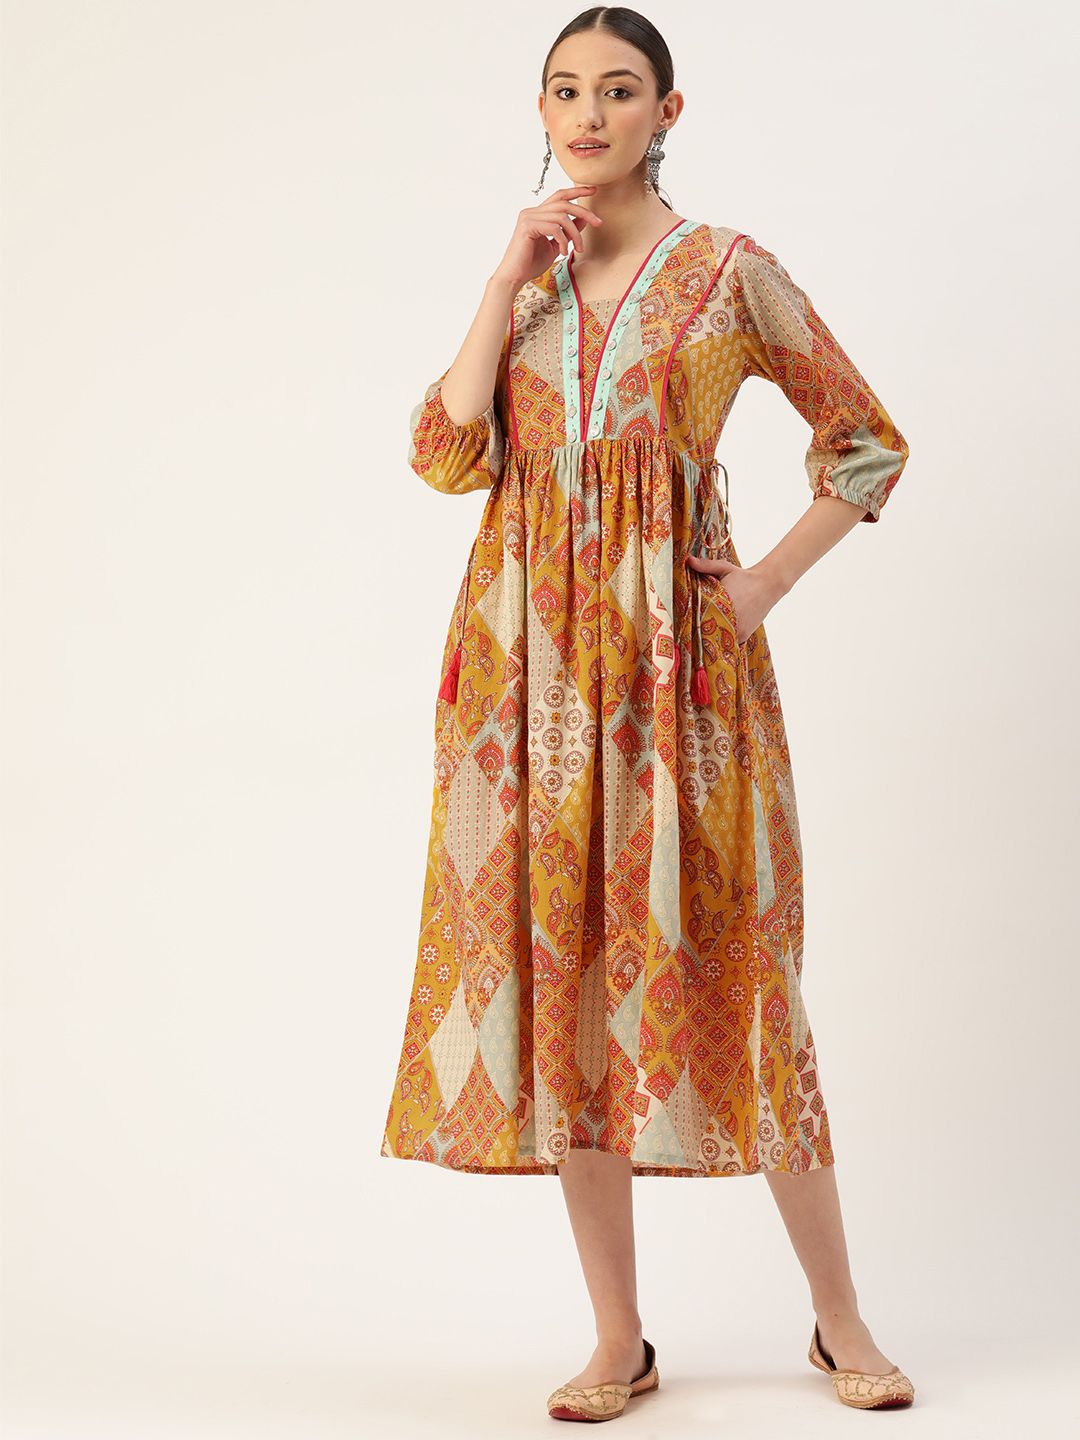 Jaipur Morni Ethnic Motifs Ethnic Midi Dress Price in India